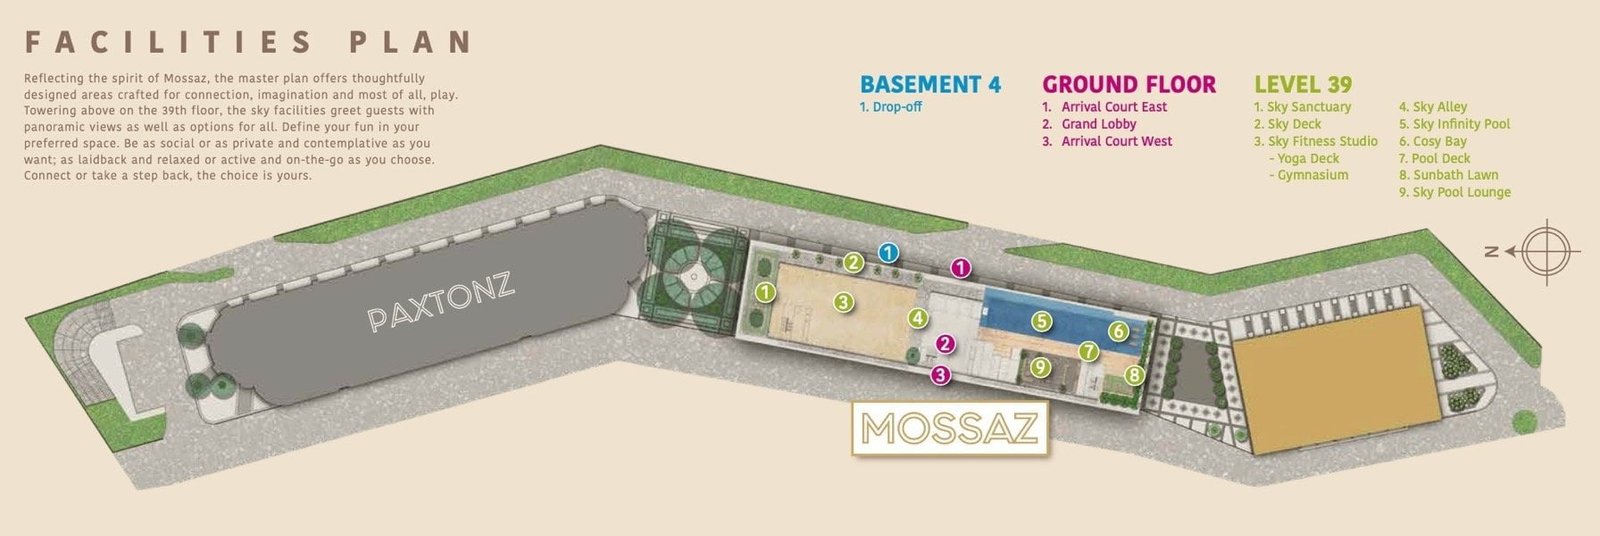 Facilities Plan @ Mossaz